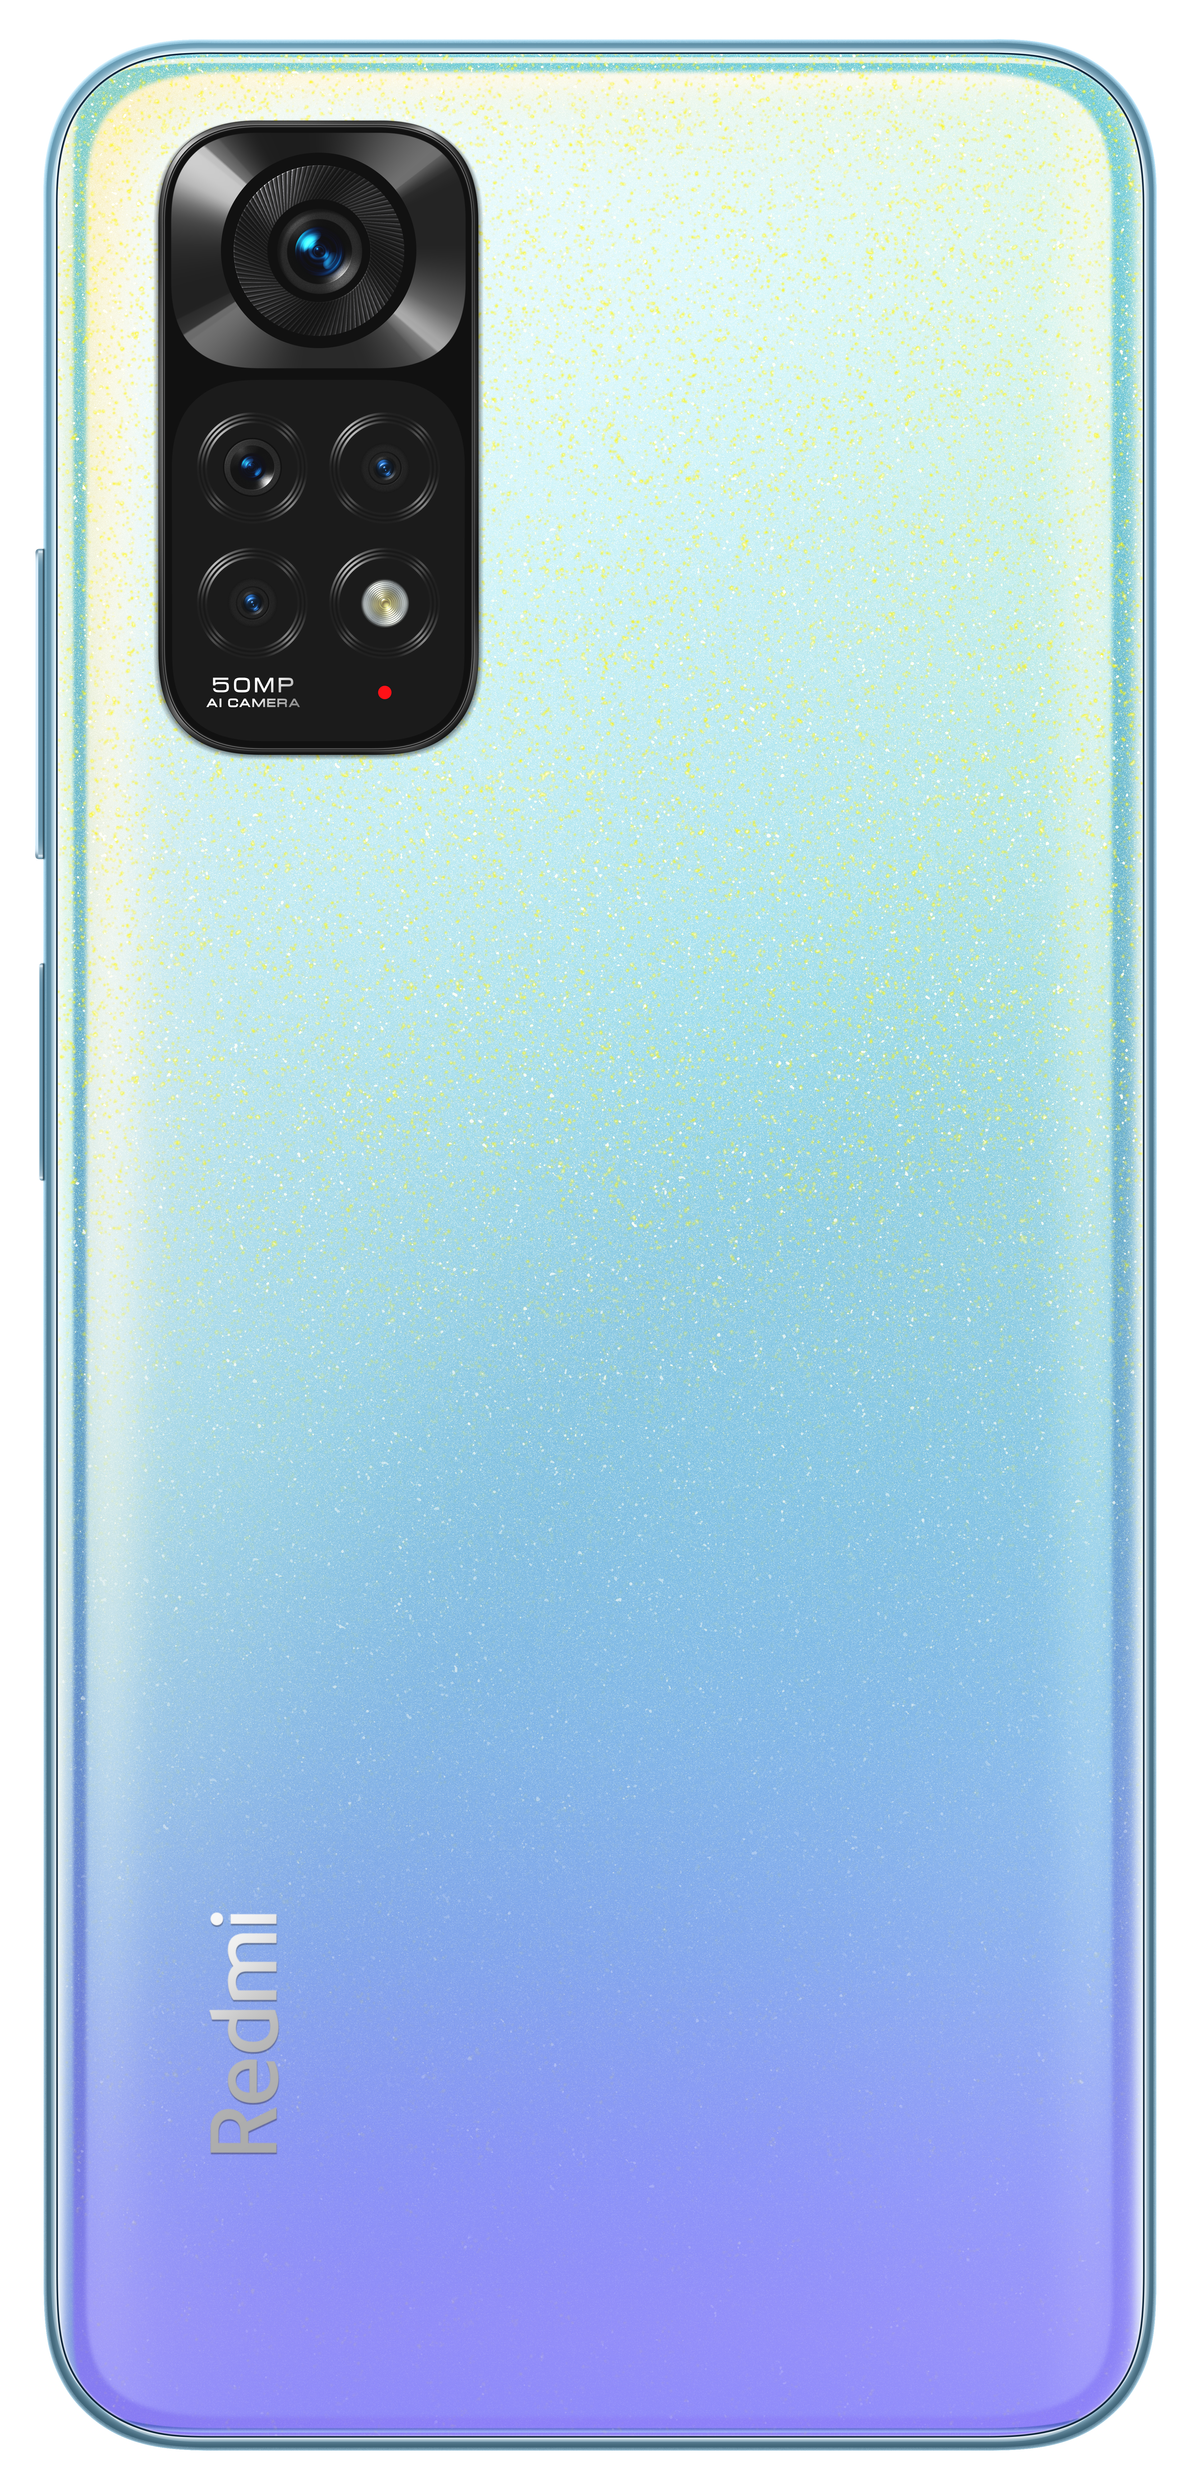 XIAOMI REDMI NOTE 11 GB Blue STAR 4+64 64 NFC Star BLUE SIM Dual